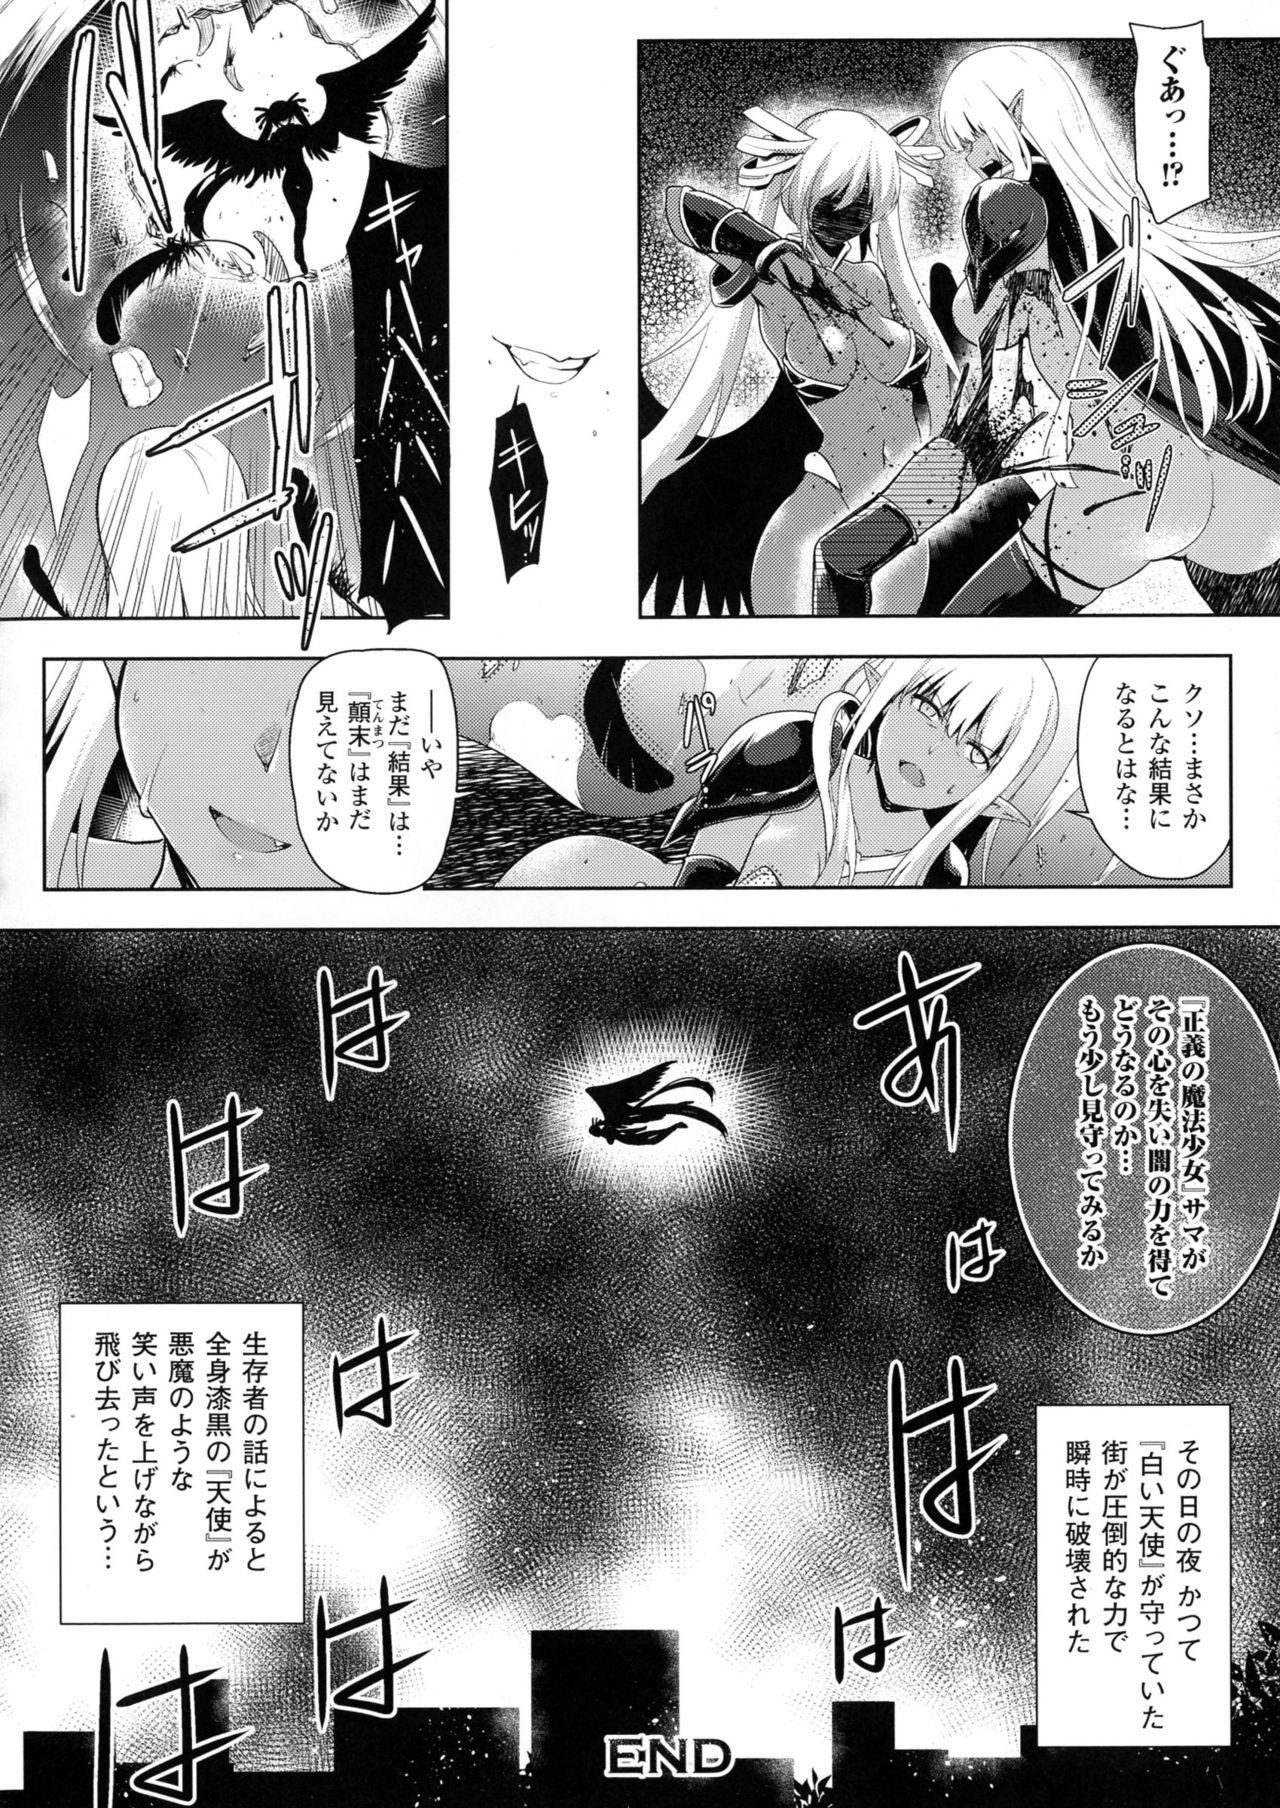 Seigi no Heroine Kangoku File DX Vol. 3 53